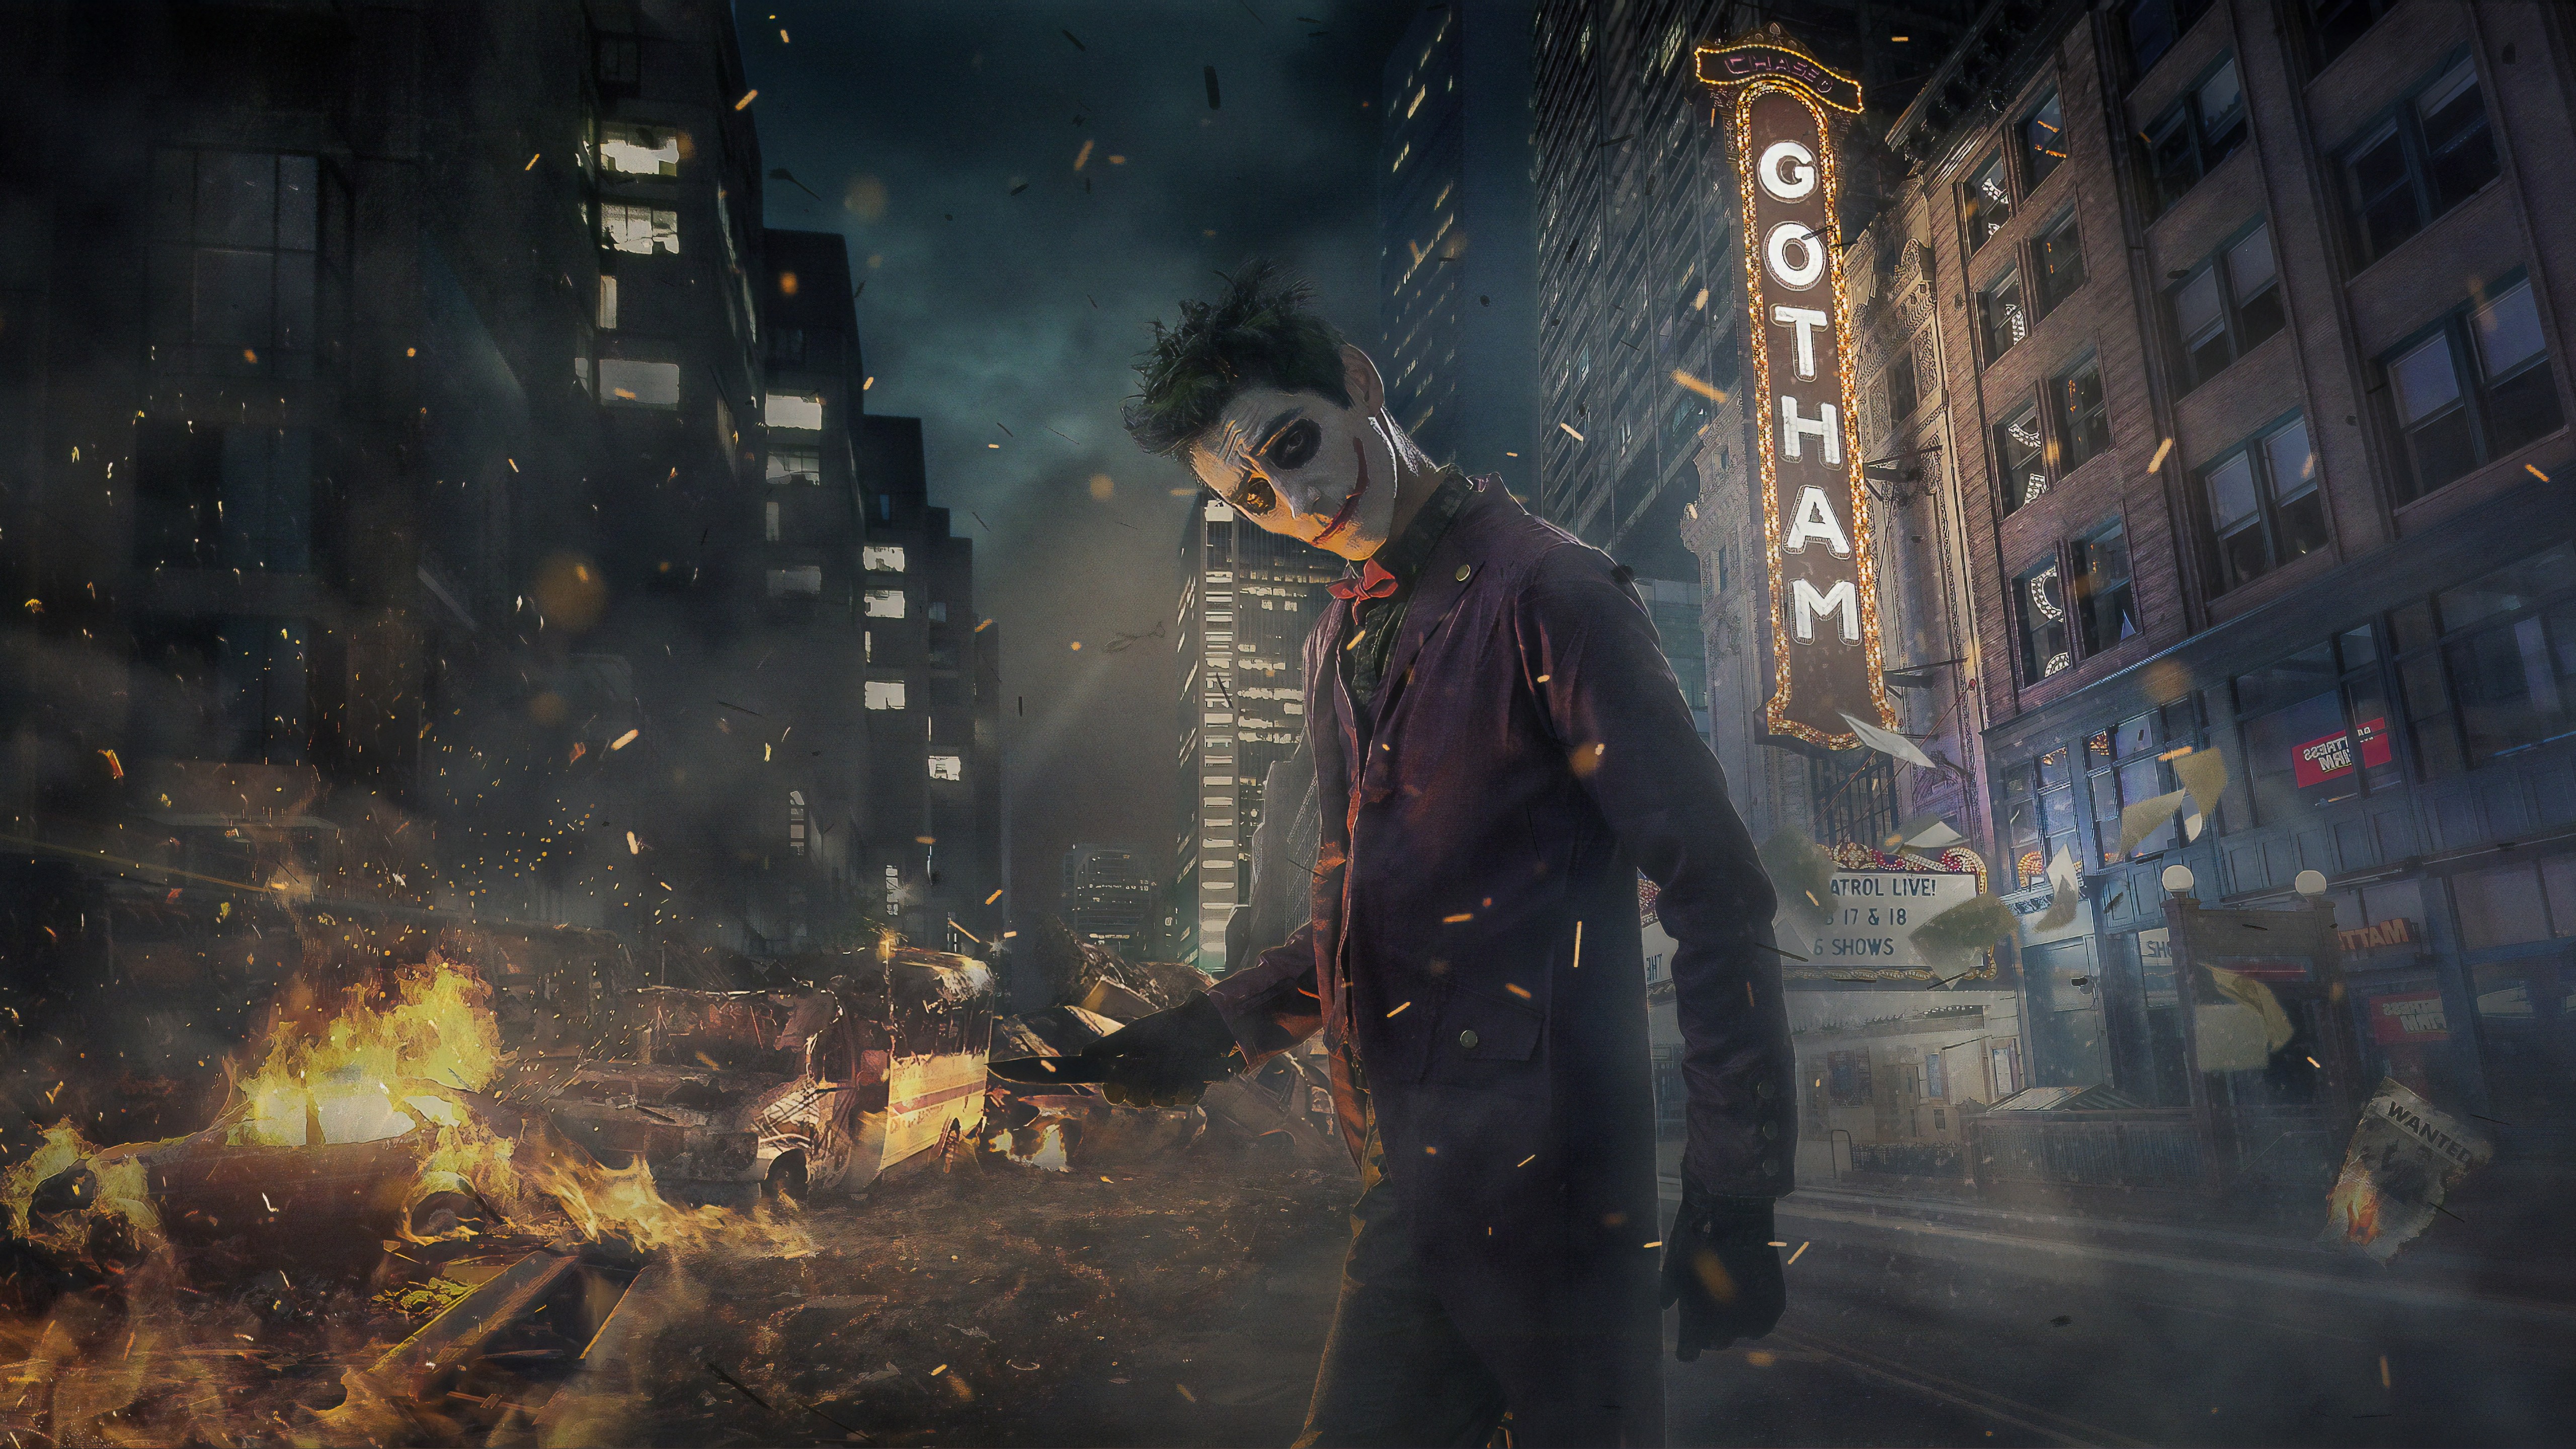 Wallpaper Joker Gotham, Joker, Jerome, Batman, Jerome and Jeremiah Valeska,  Background - Download Free Image